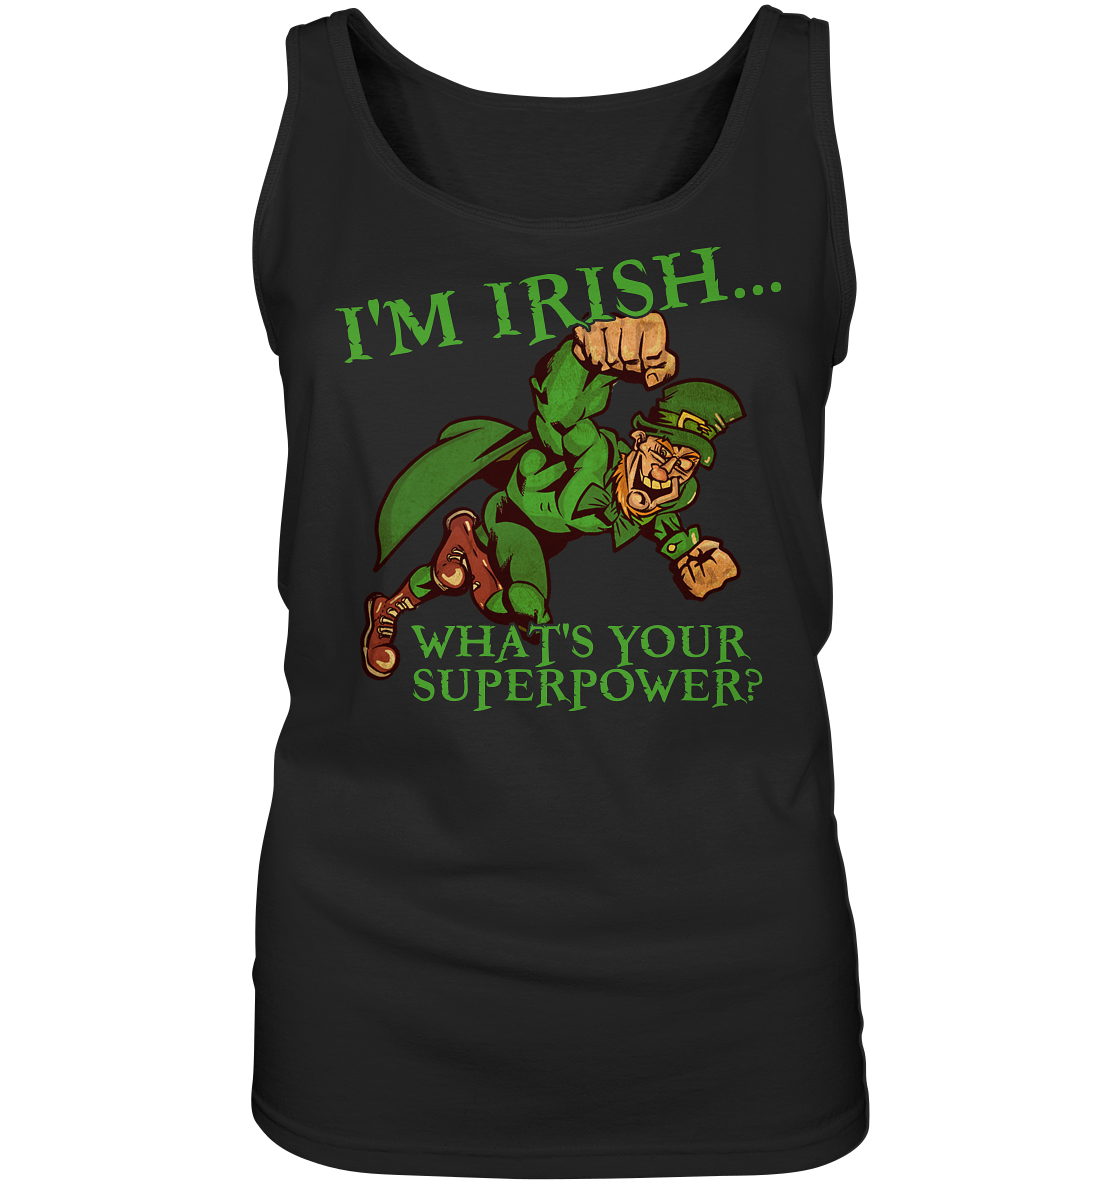 I'm Irish "What's Your Superpower?" - Ladies Tank-Top